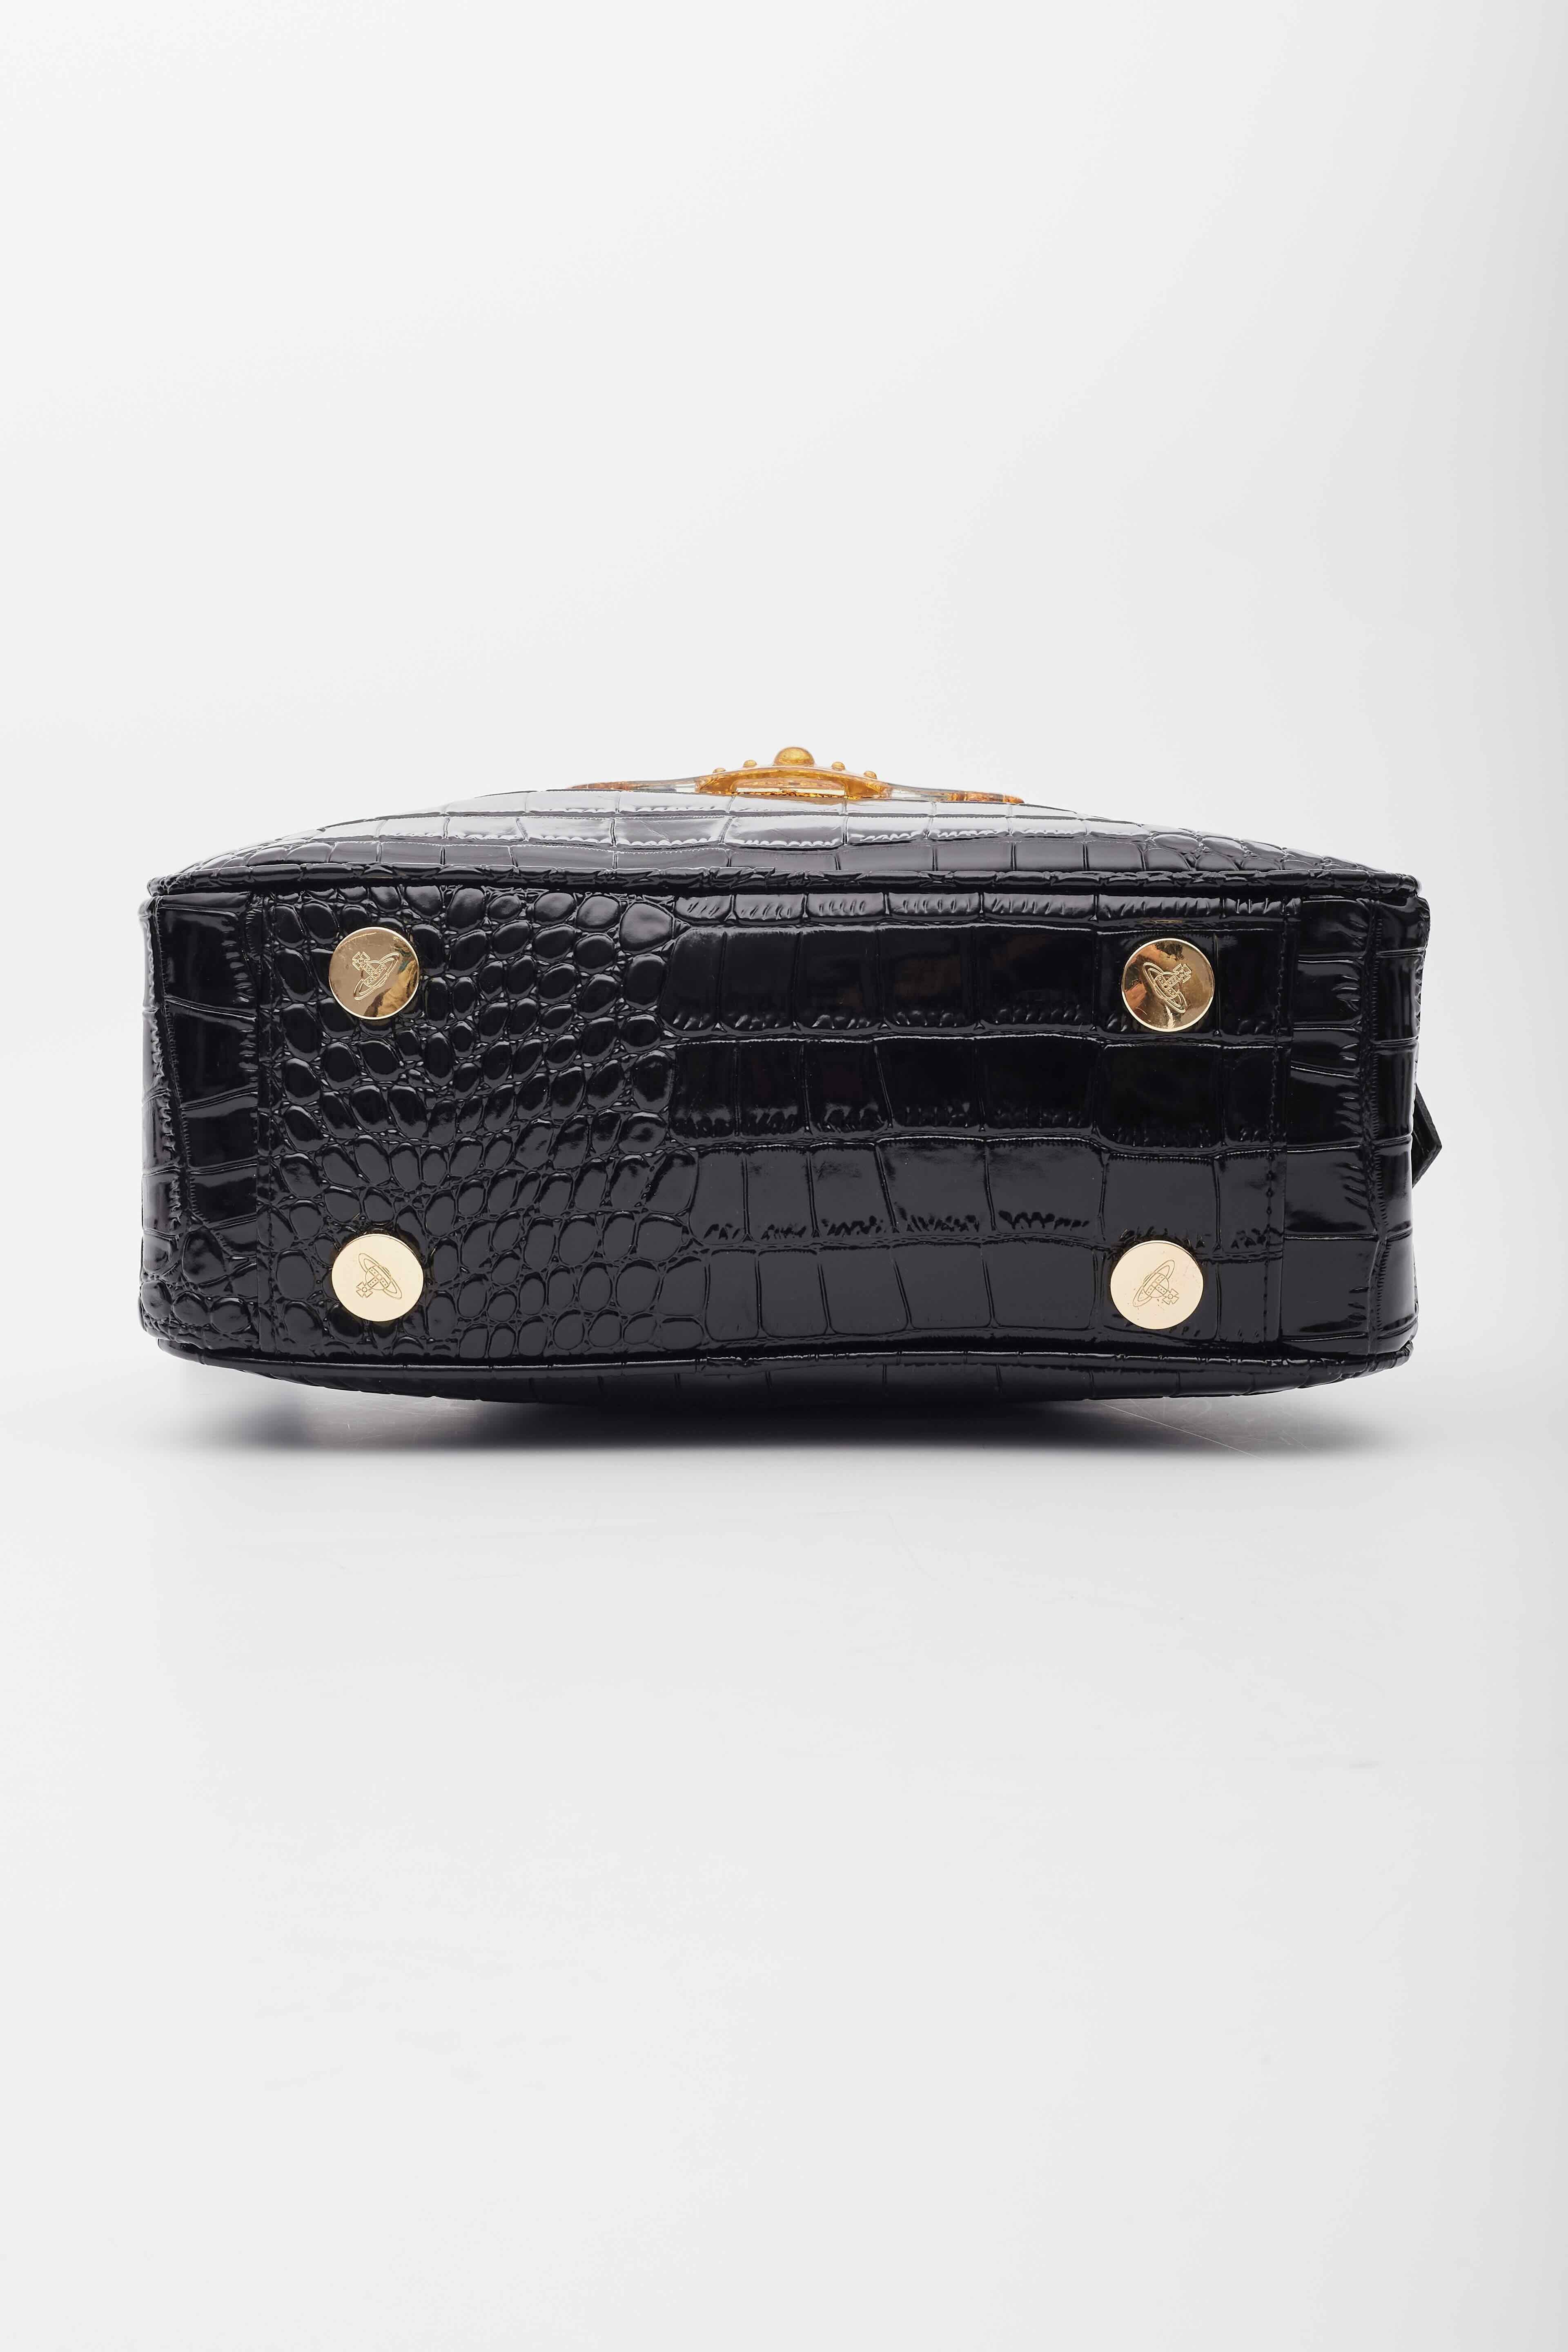 Vivienne Westwood Black Crocodile Chancery Handbag For Sale 1